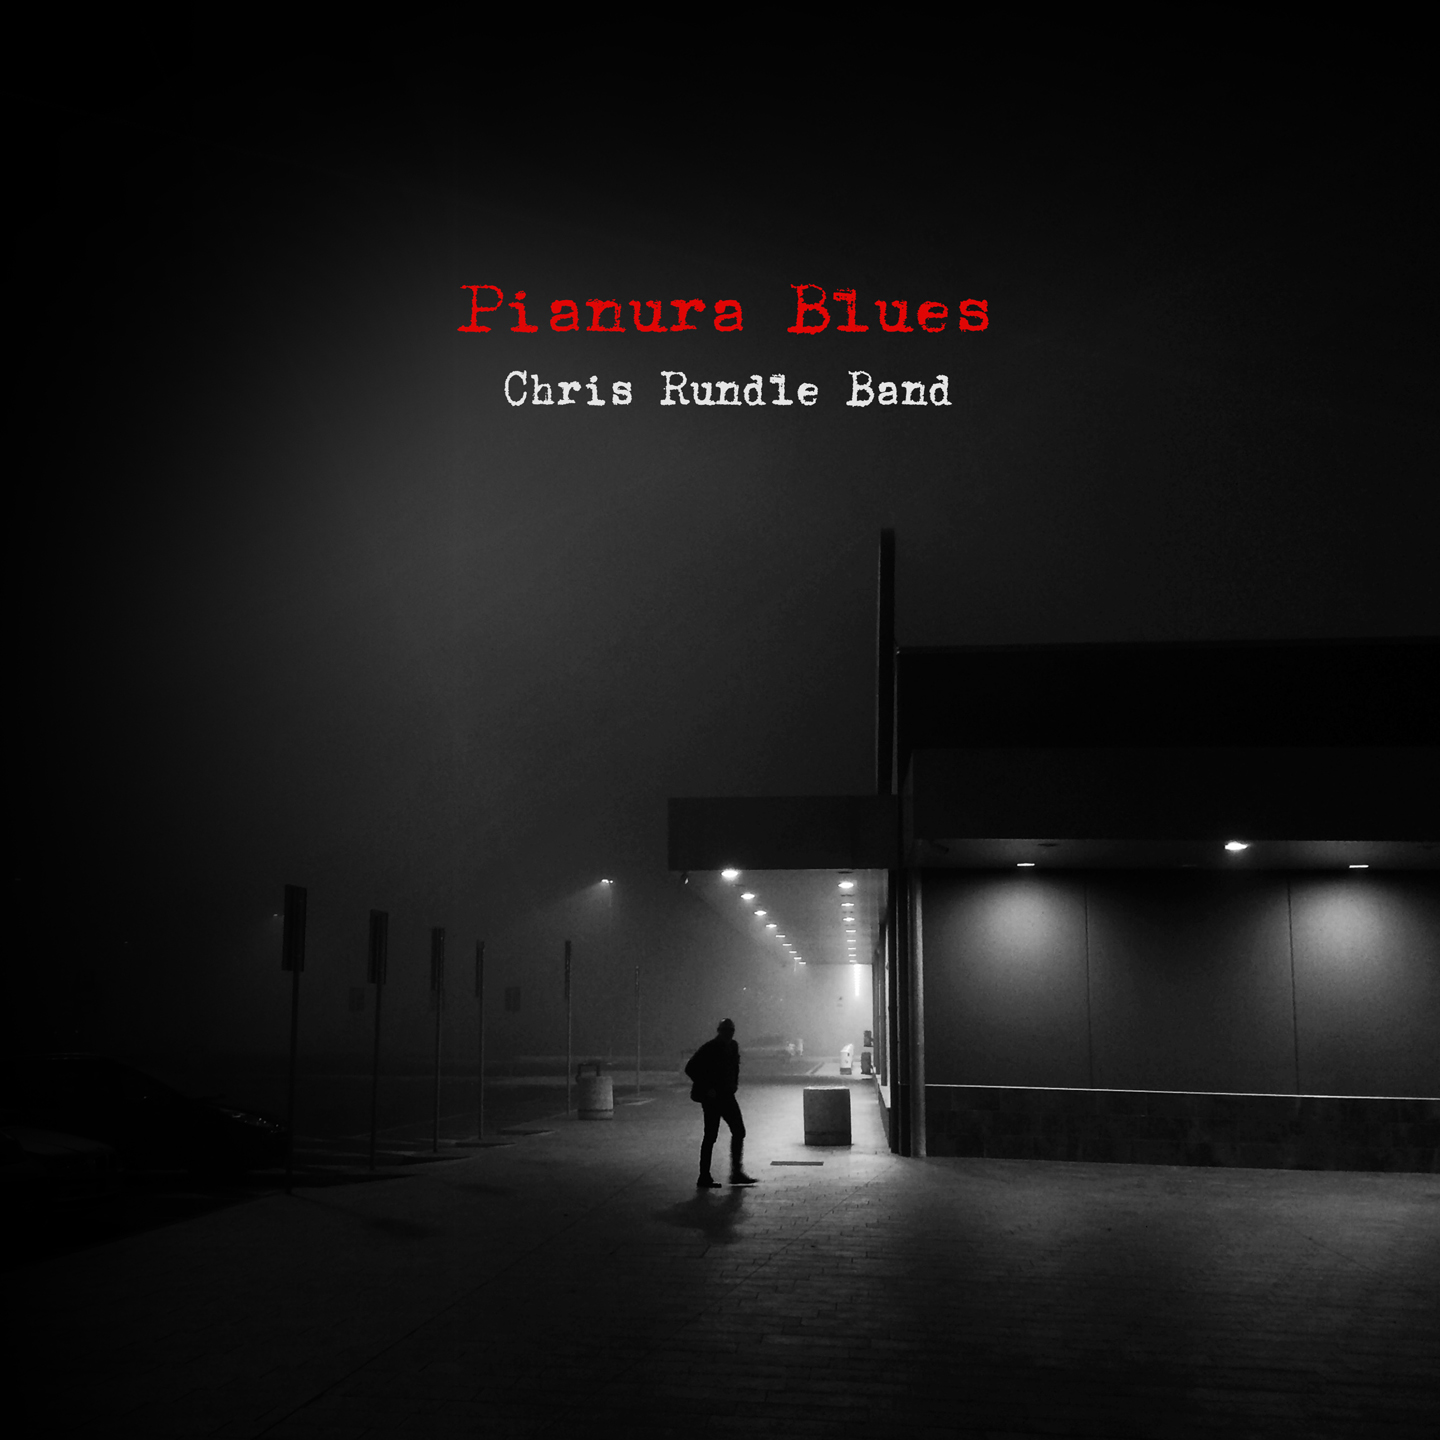 Chris Rundle Band – “Pianura Blues”